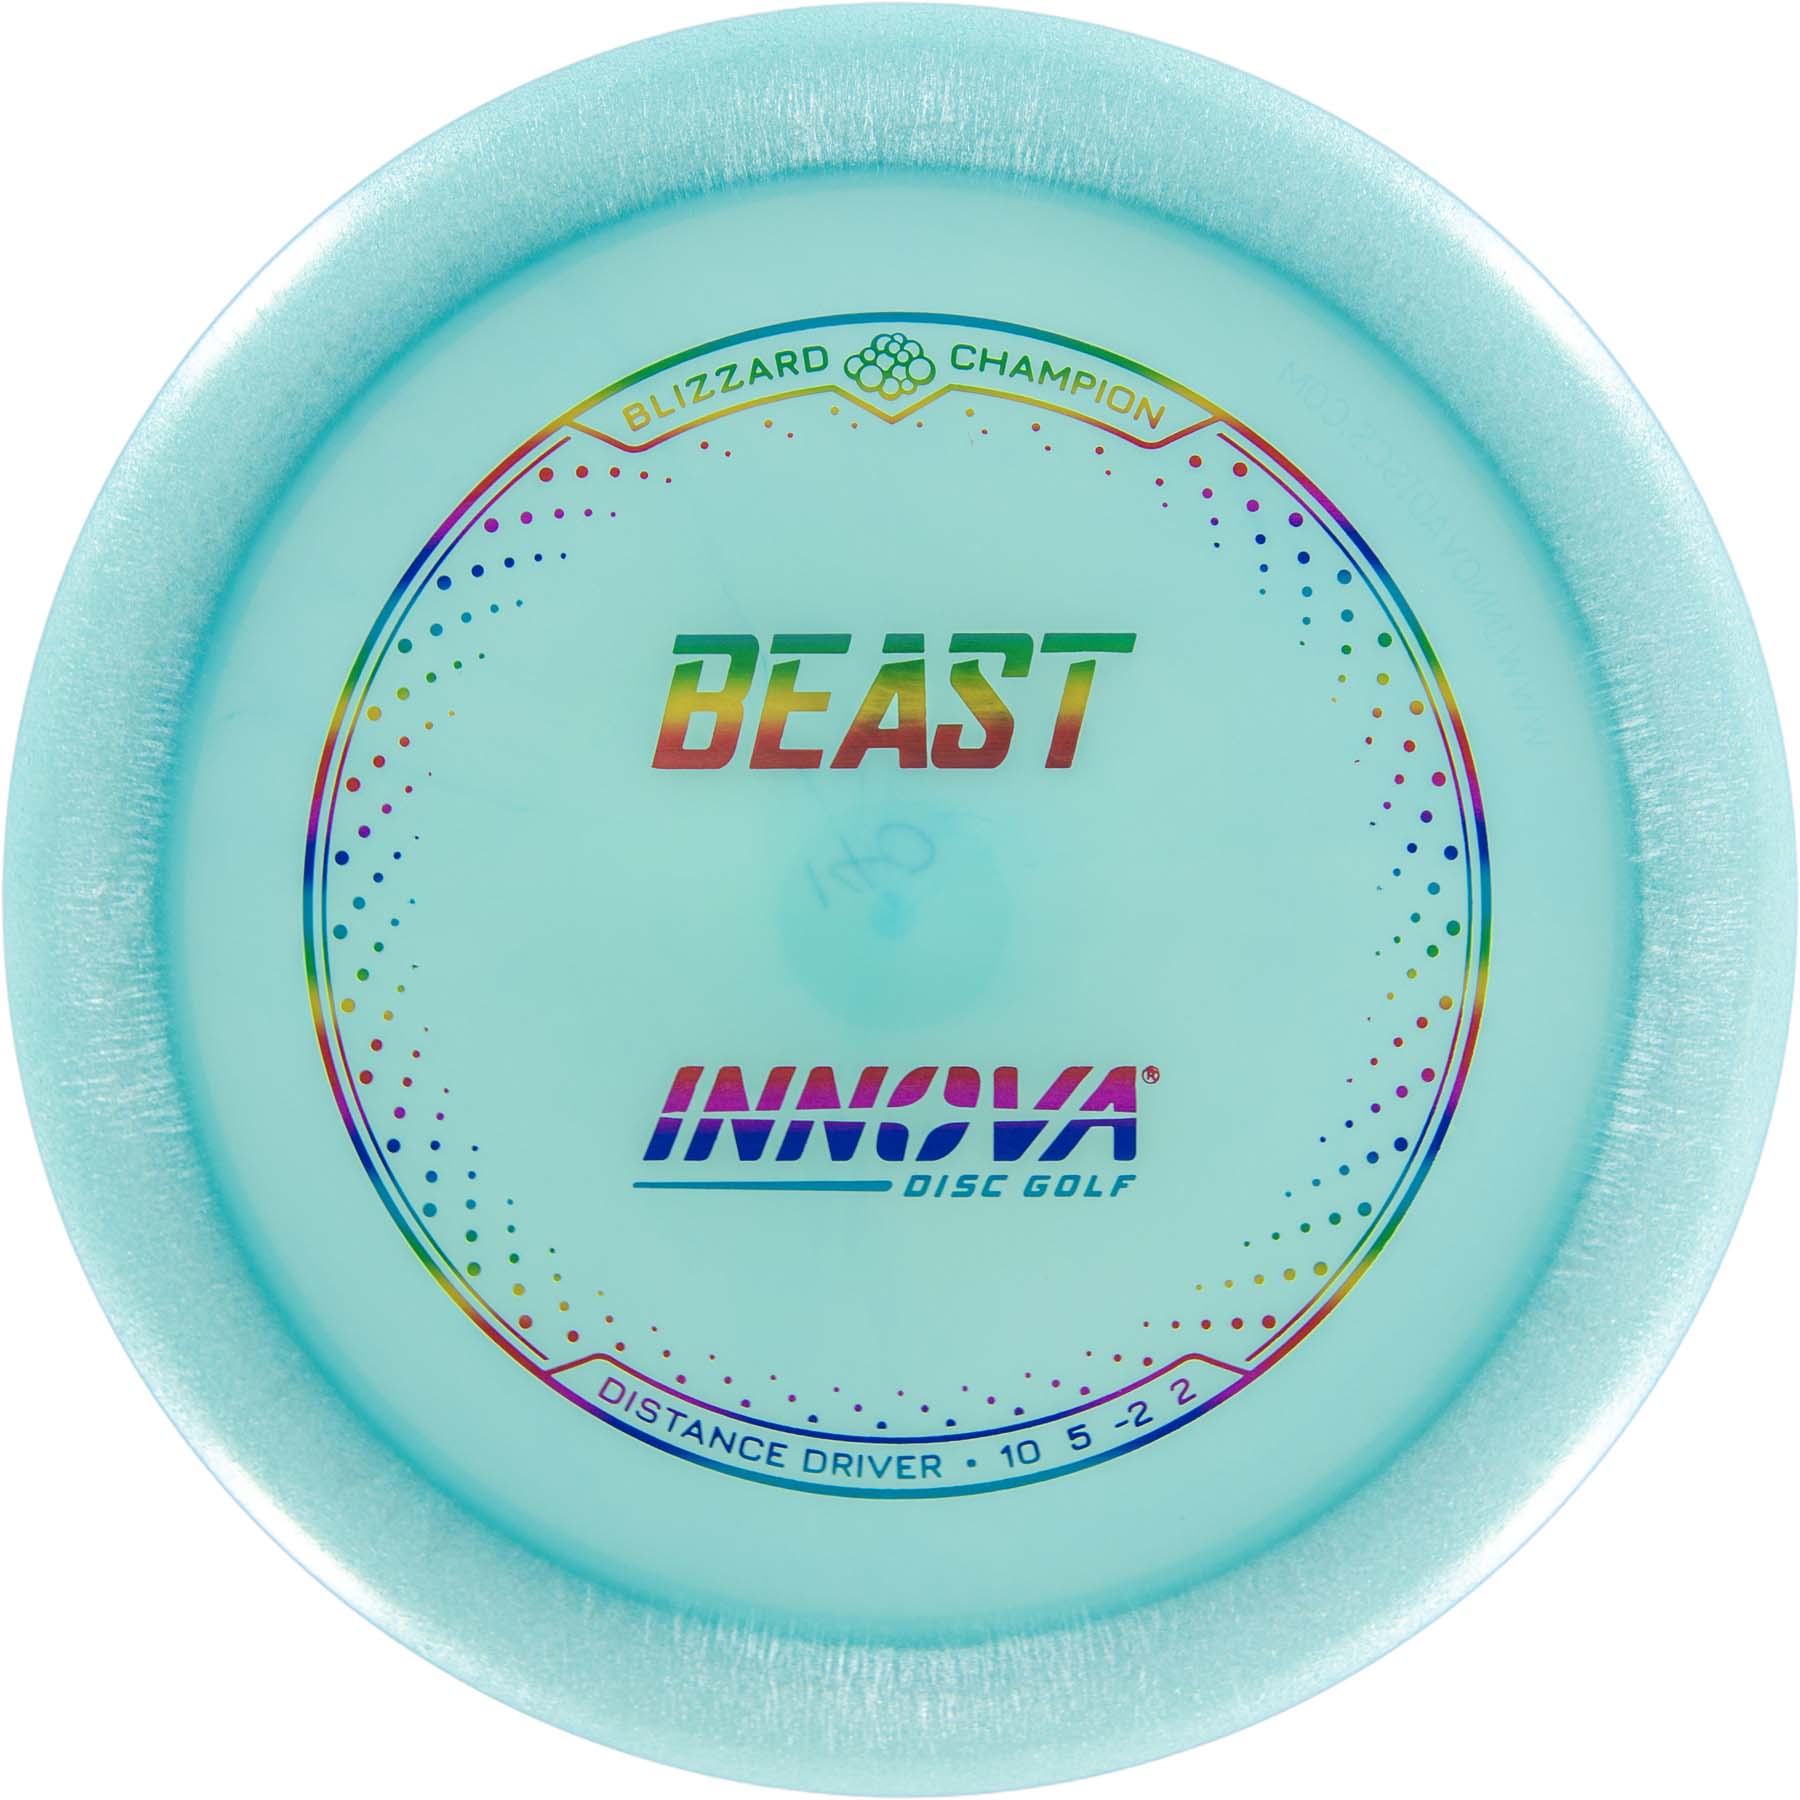 Innova Blizzard Beast - Light Weight Distance Driver. Blue color.